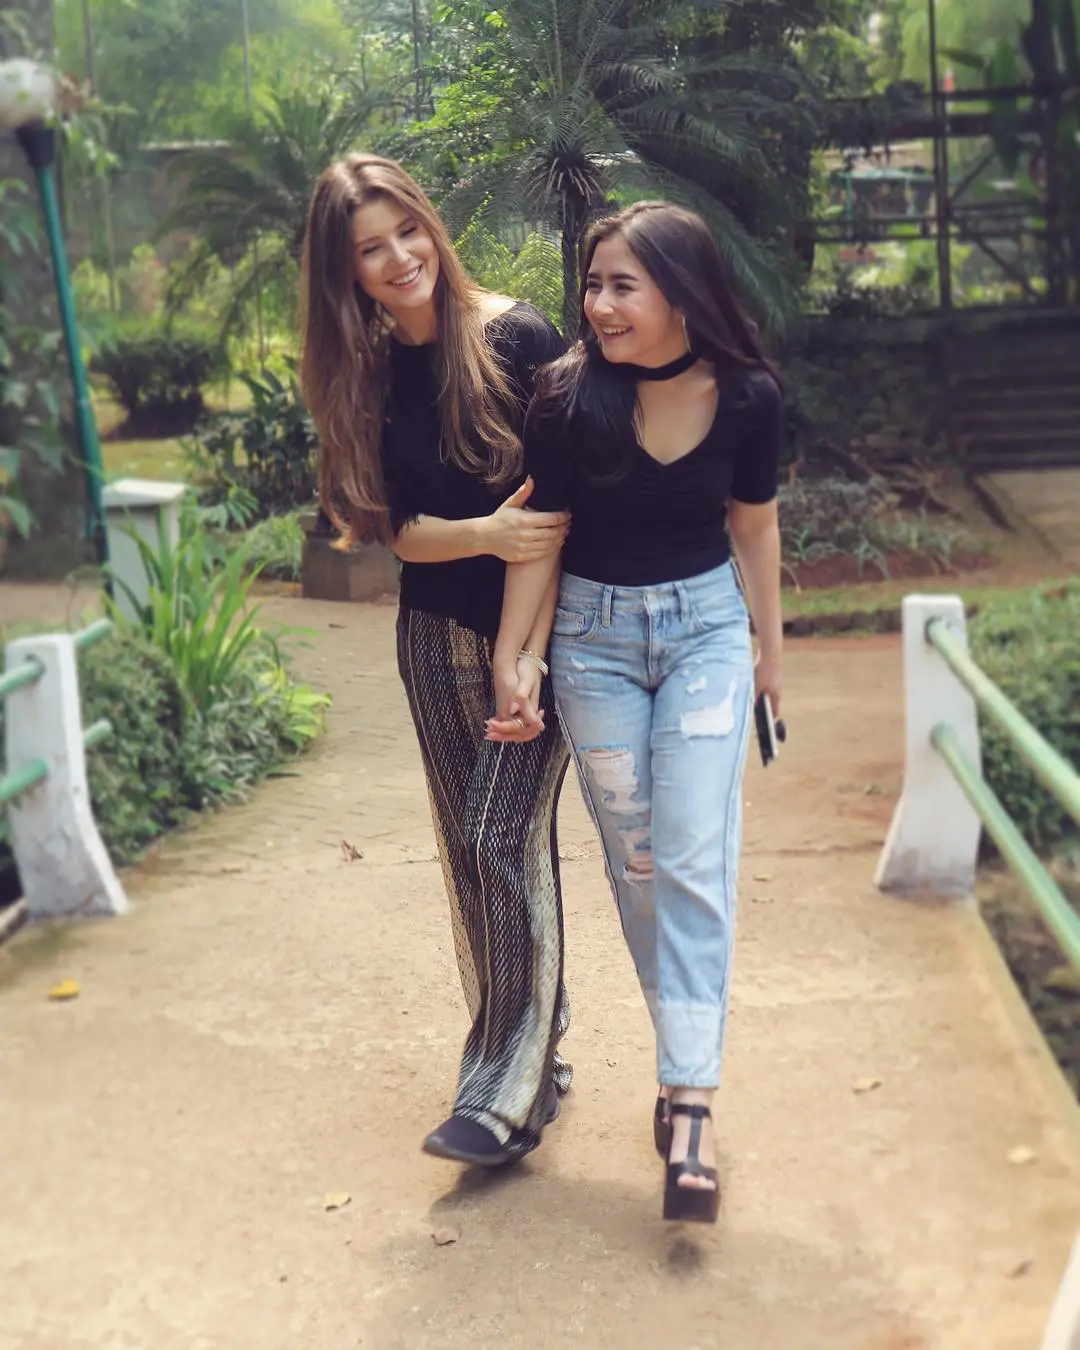 Prilly Latuconsina bersama Amanda Cerny. (Instagram - @prillylatuconsina96)